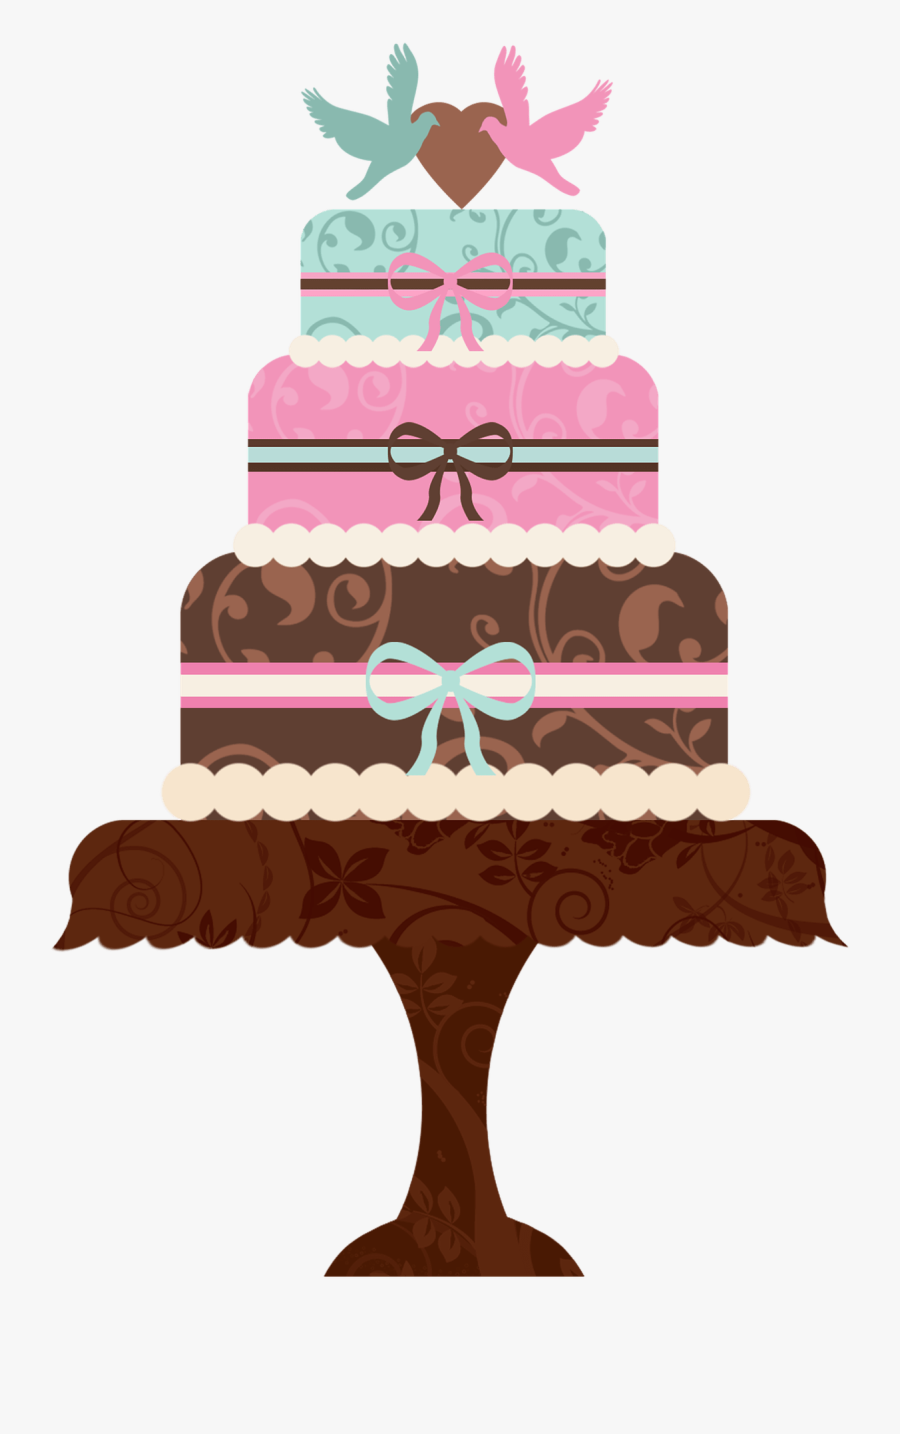 Cake, Cakes, Wedding Cake, Food, Dessert, Sweet - Wedding Cake Clipart Png, Transparent Clipart